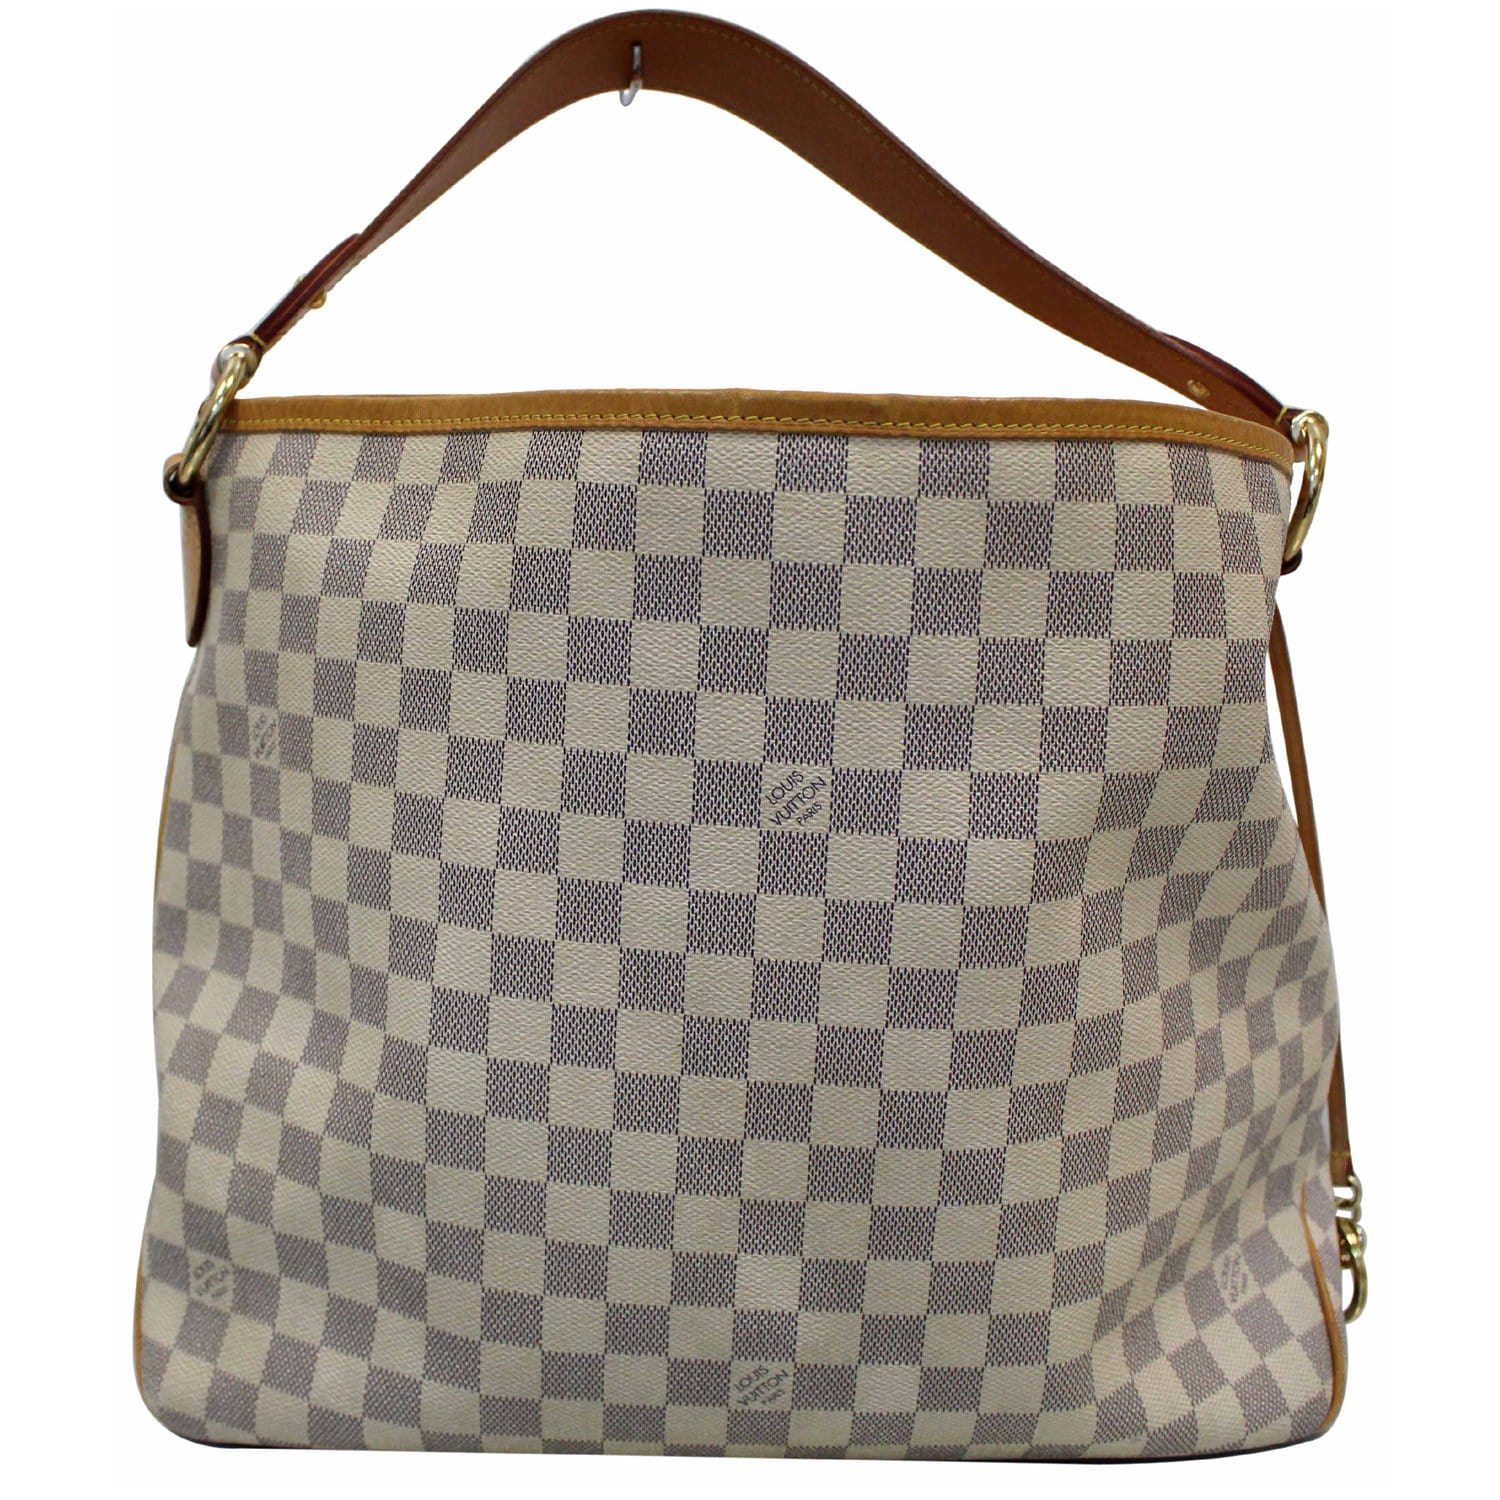 USED Louis Vuitton Damier Azur Delightful PM Hobo Shoulder Bag AUTHENTIC